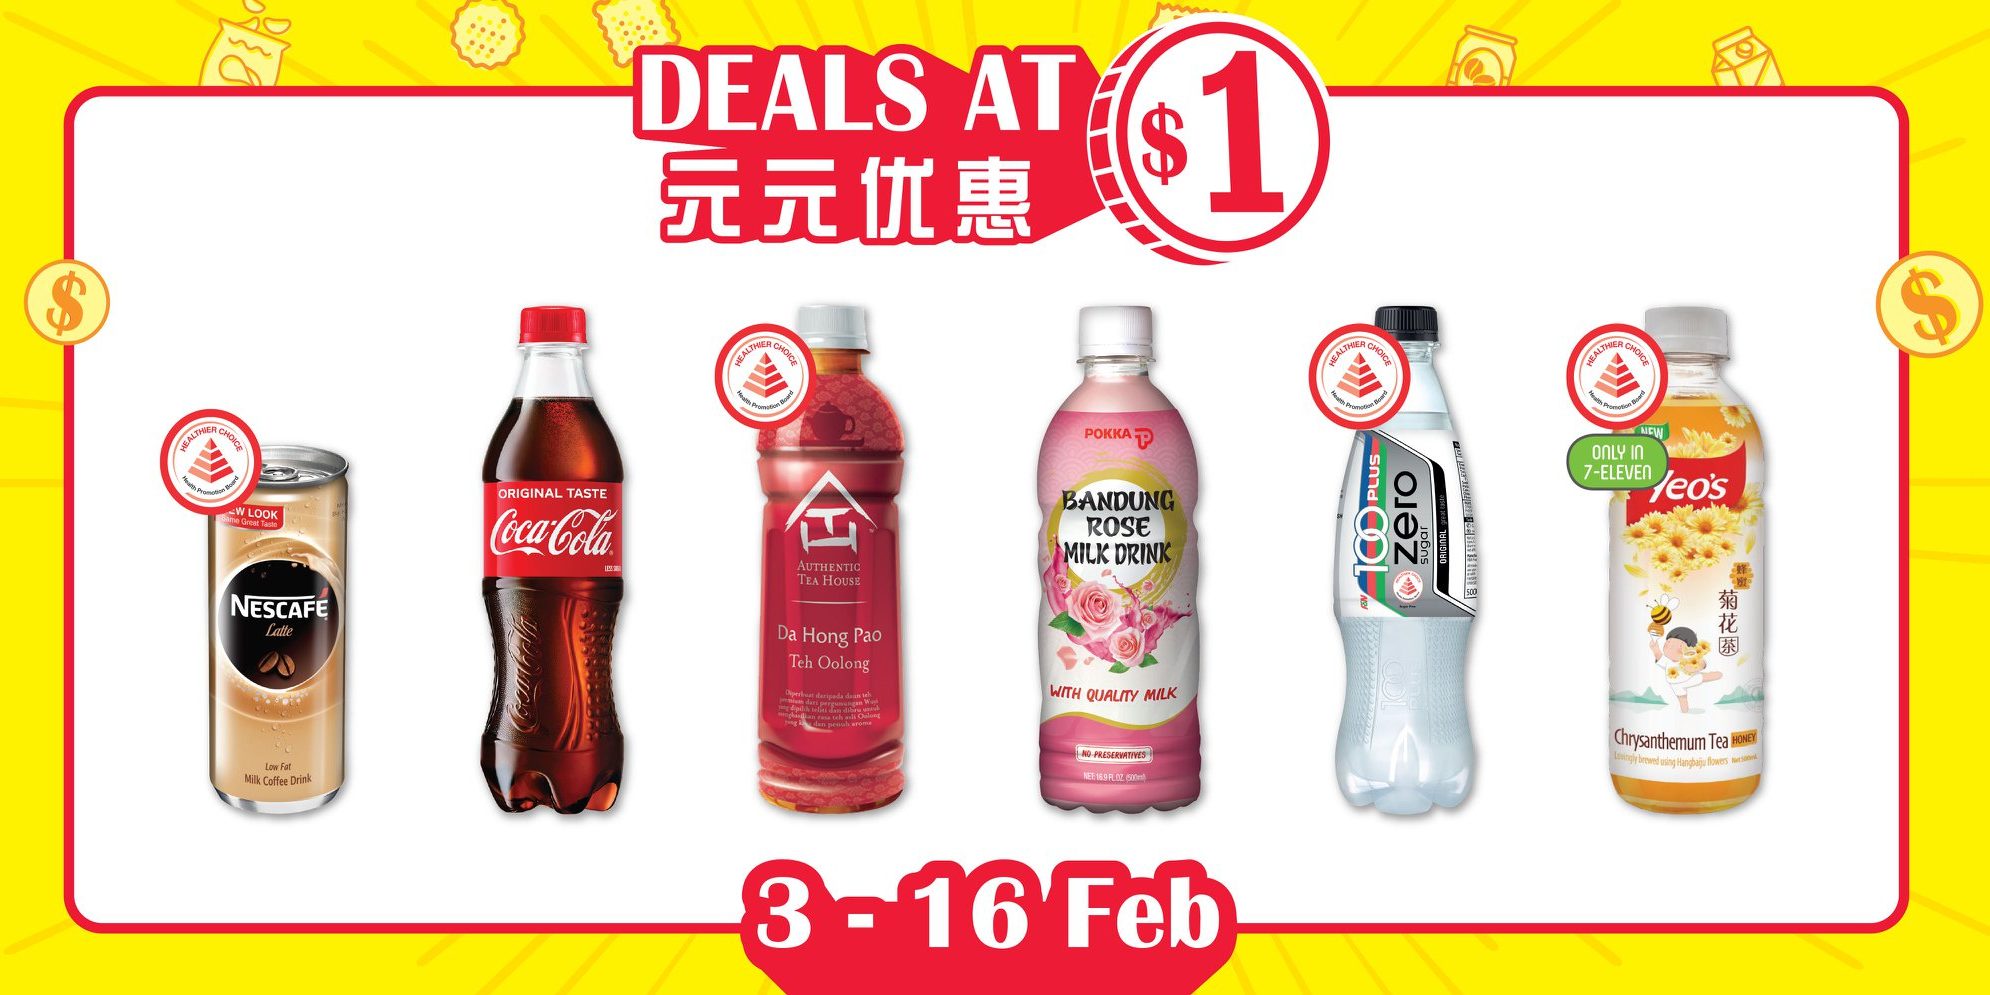 7-Eleven Singapore Deals At $1 Promotion 3-16 Feb 2021